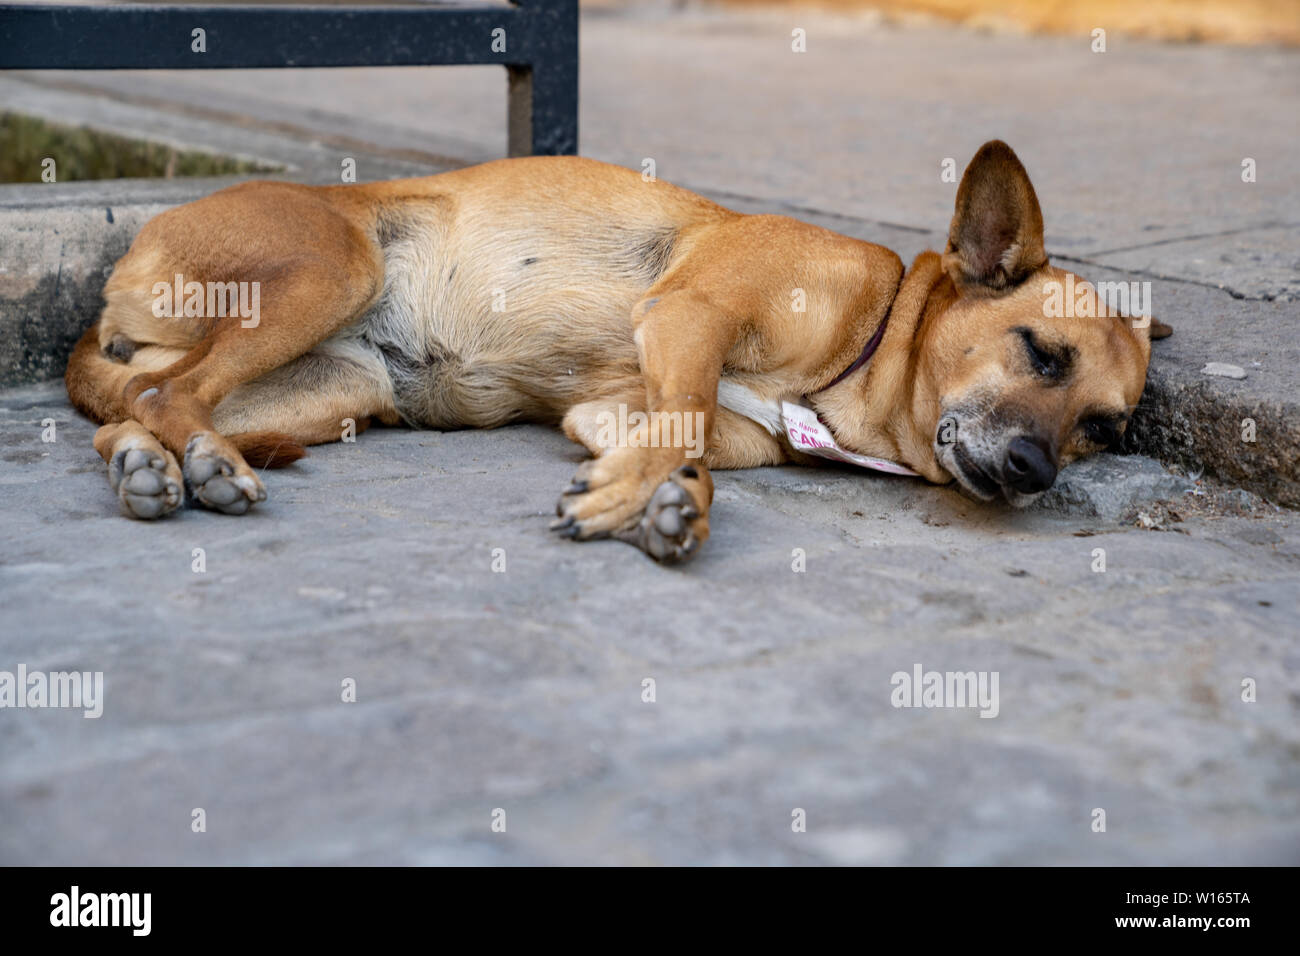 Street Dogs from Havana, Cuba. Stock Photo